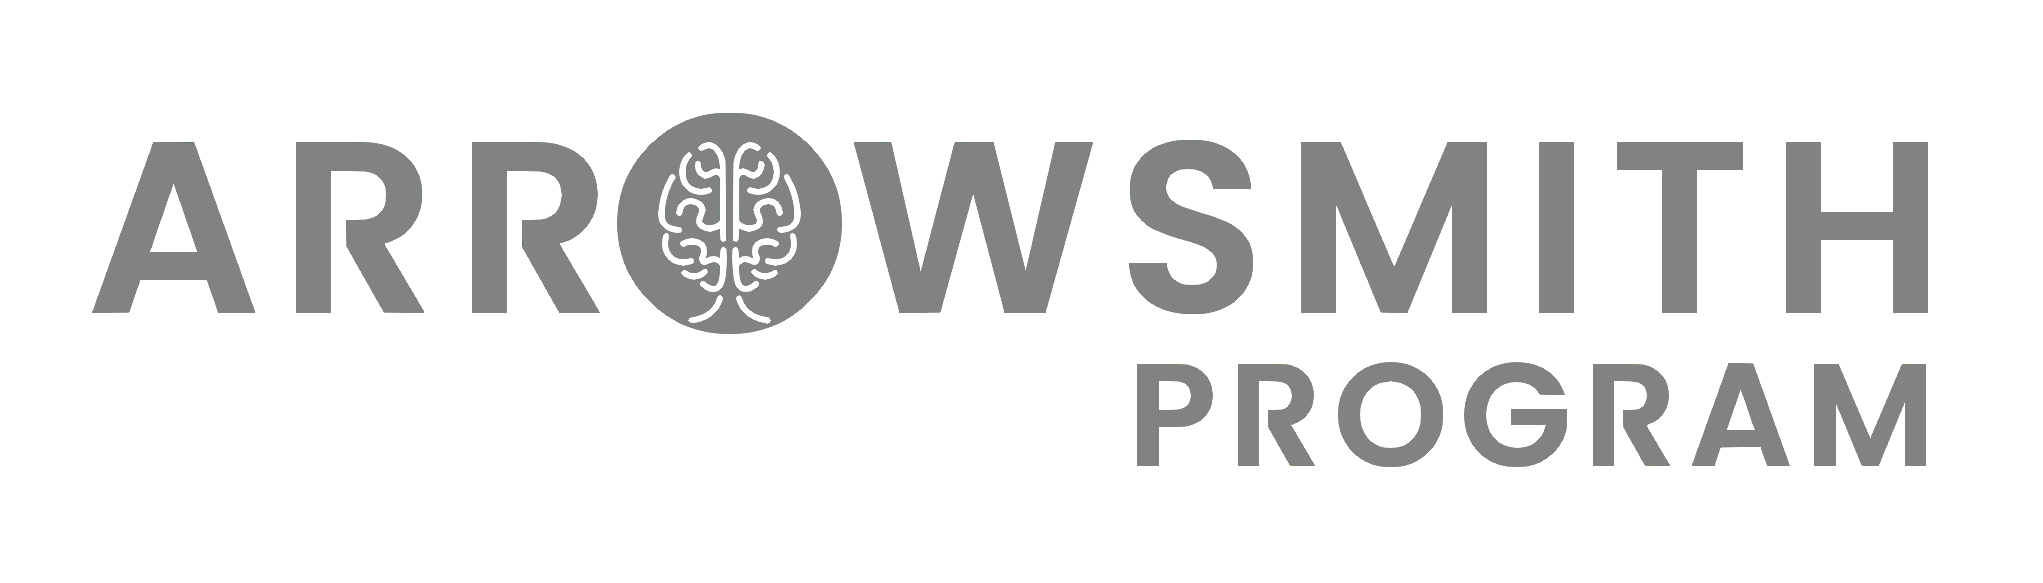 Arrowsmith Program Logo